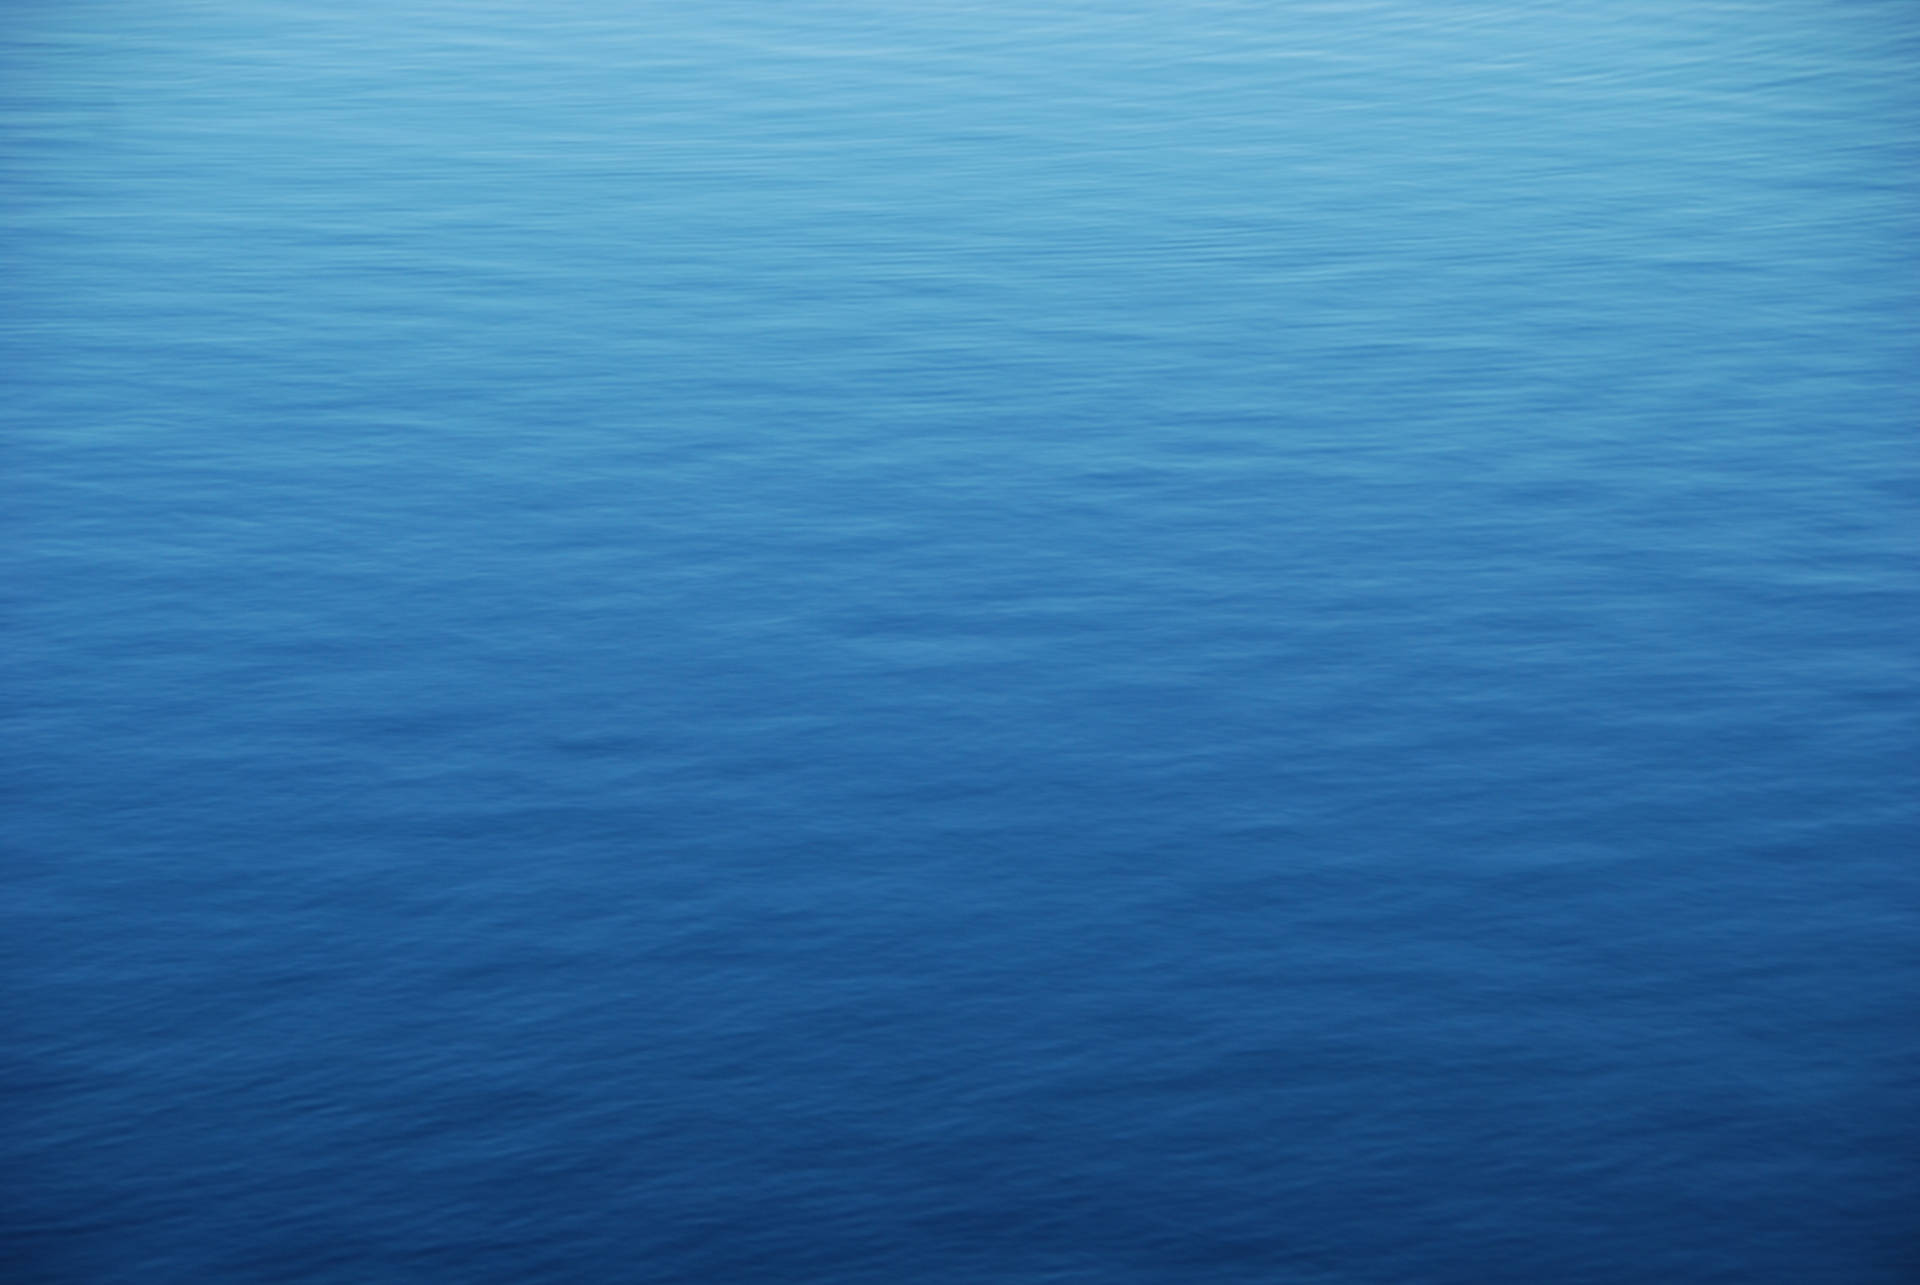 Plain Blue Ocean Water Hd Picture